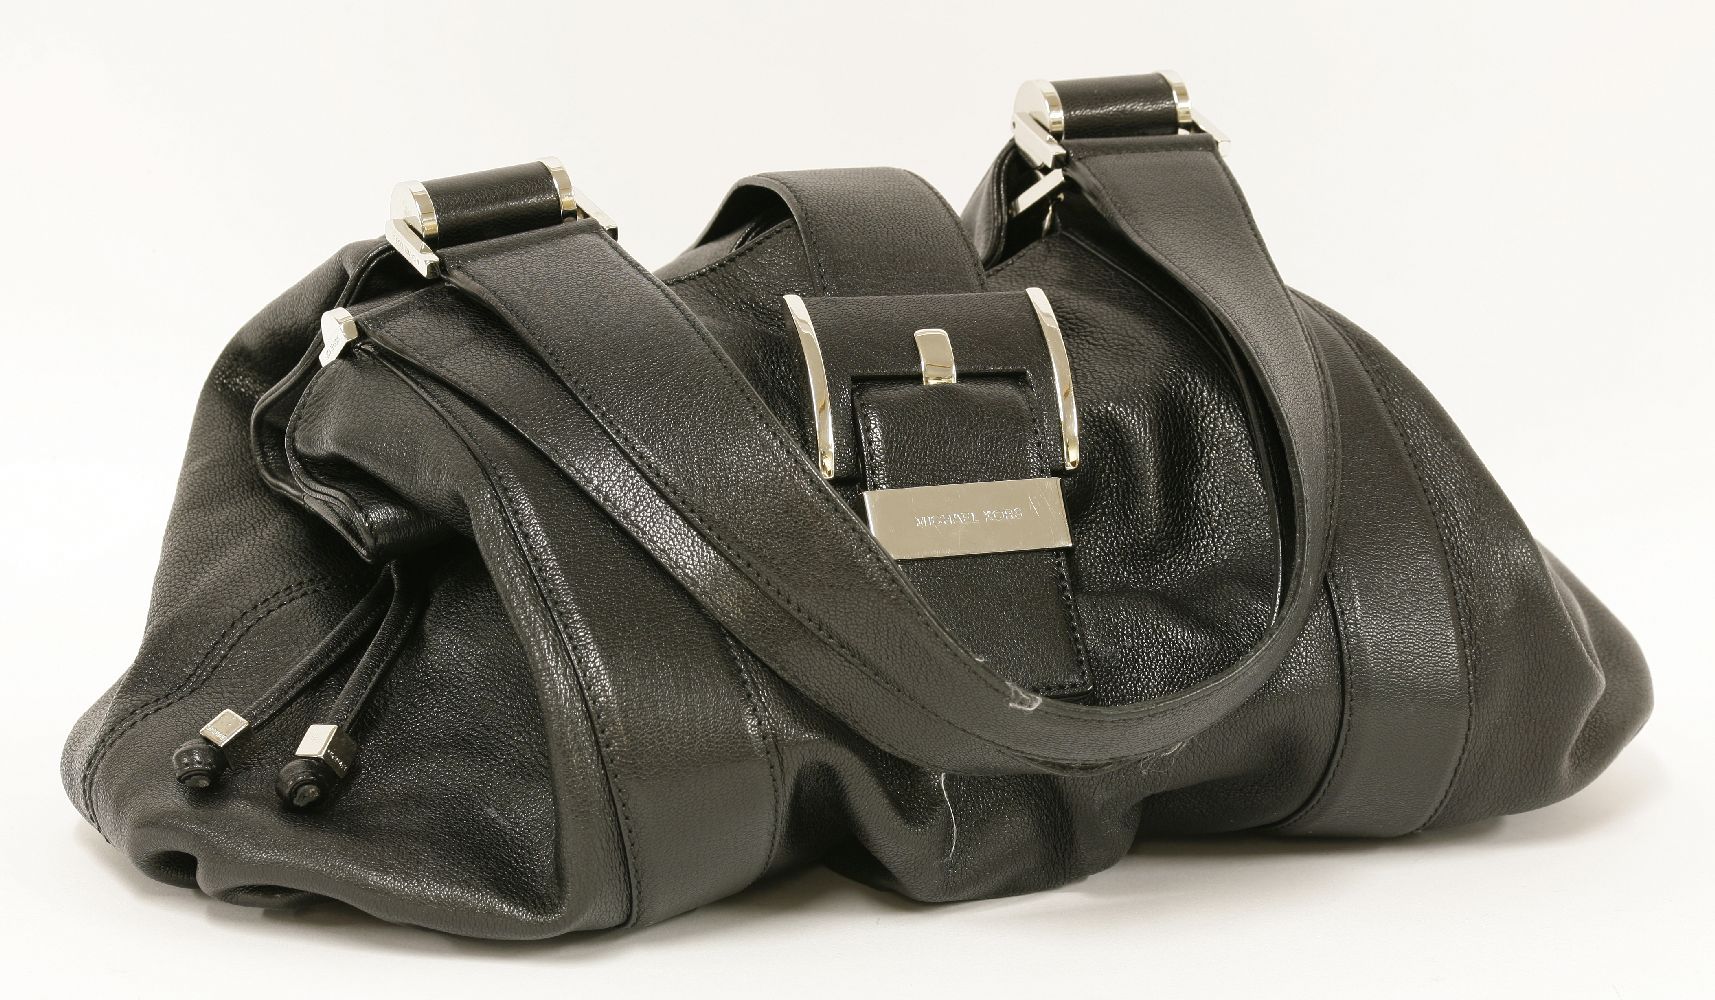 A Michael Kors black leather shoulder handbag, soft grain calfskin leather with silver-tone